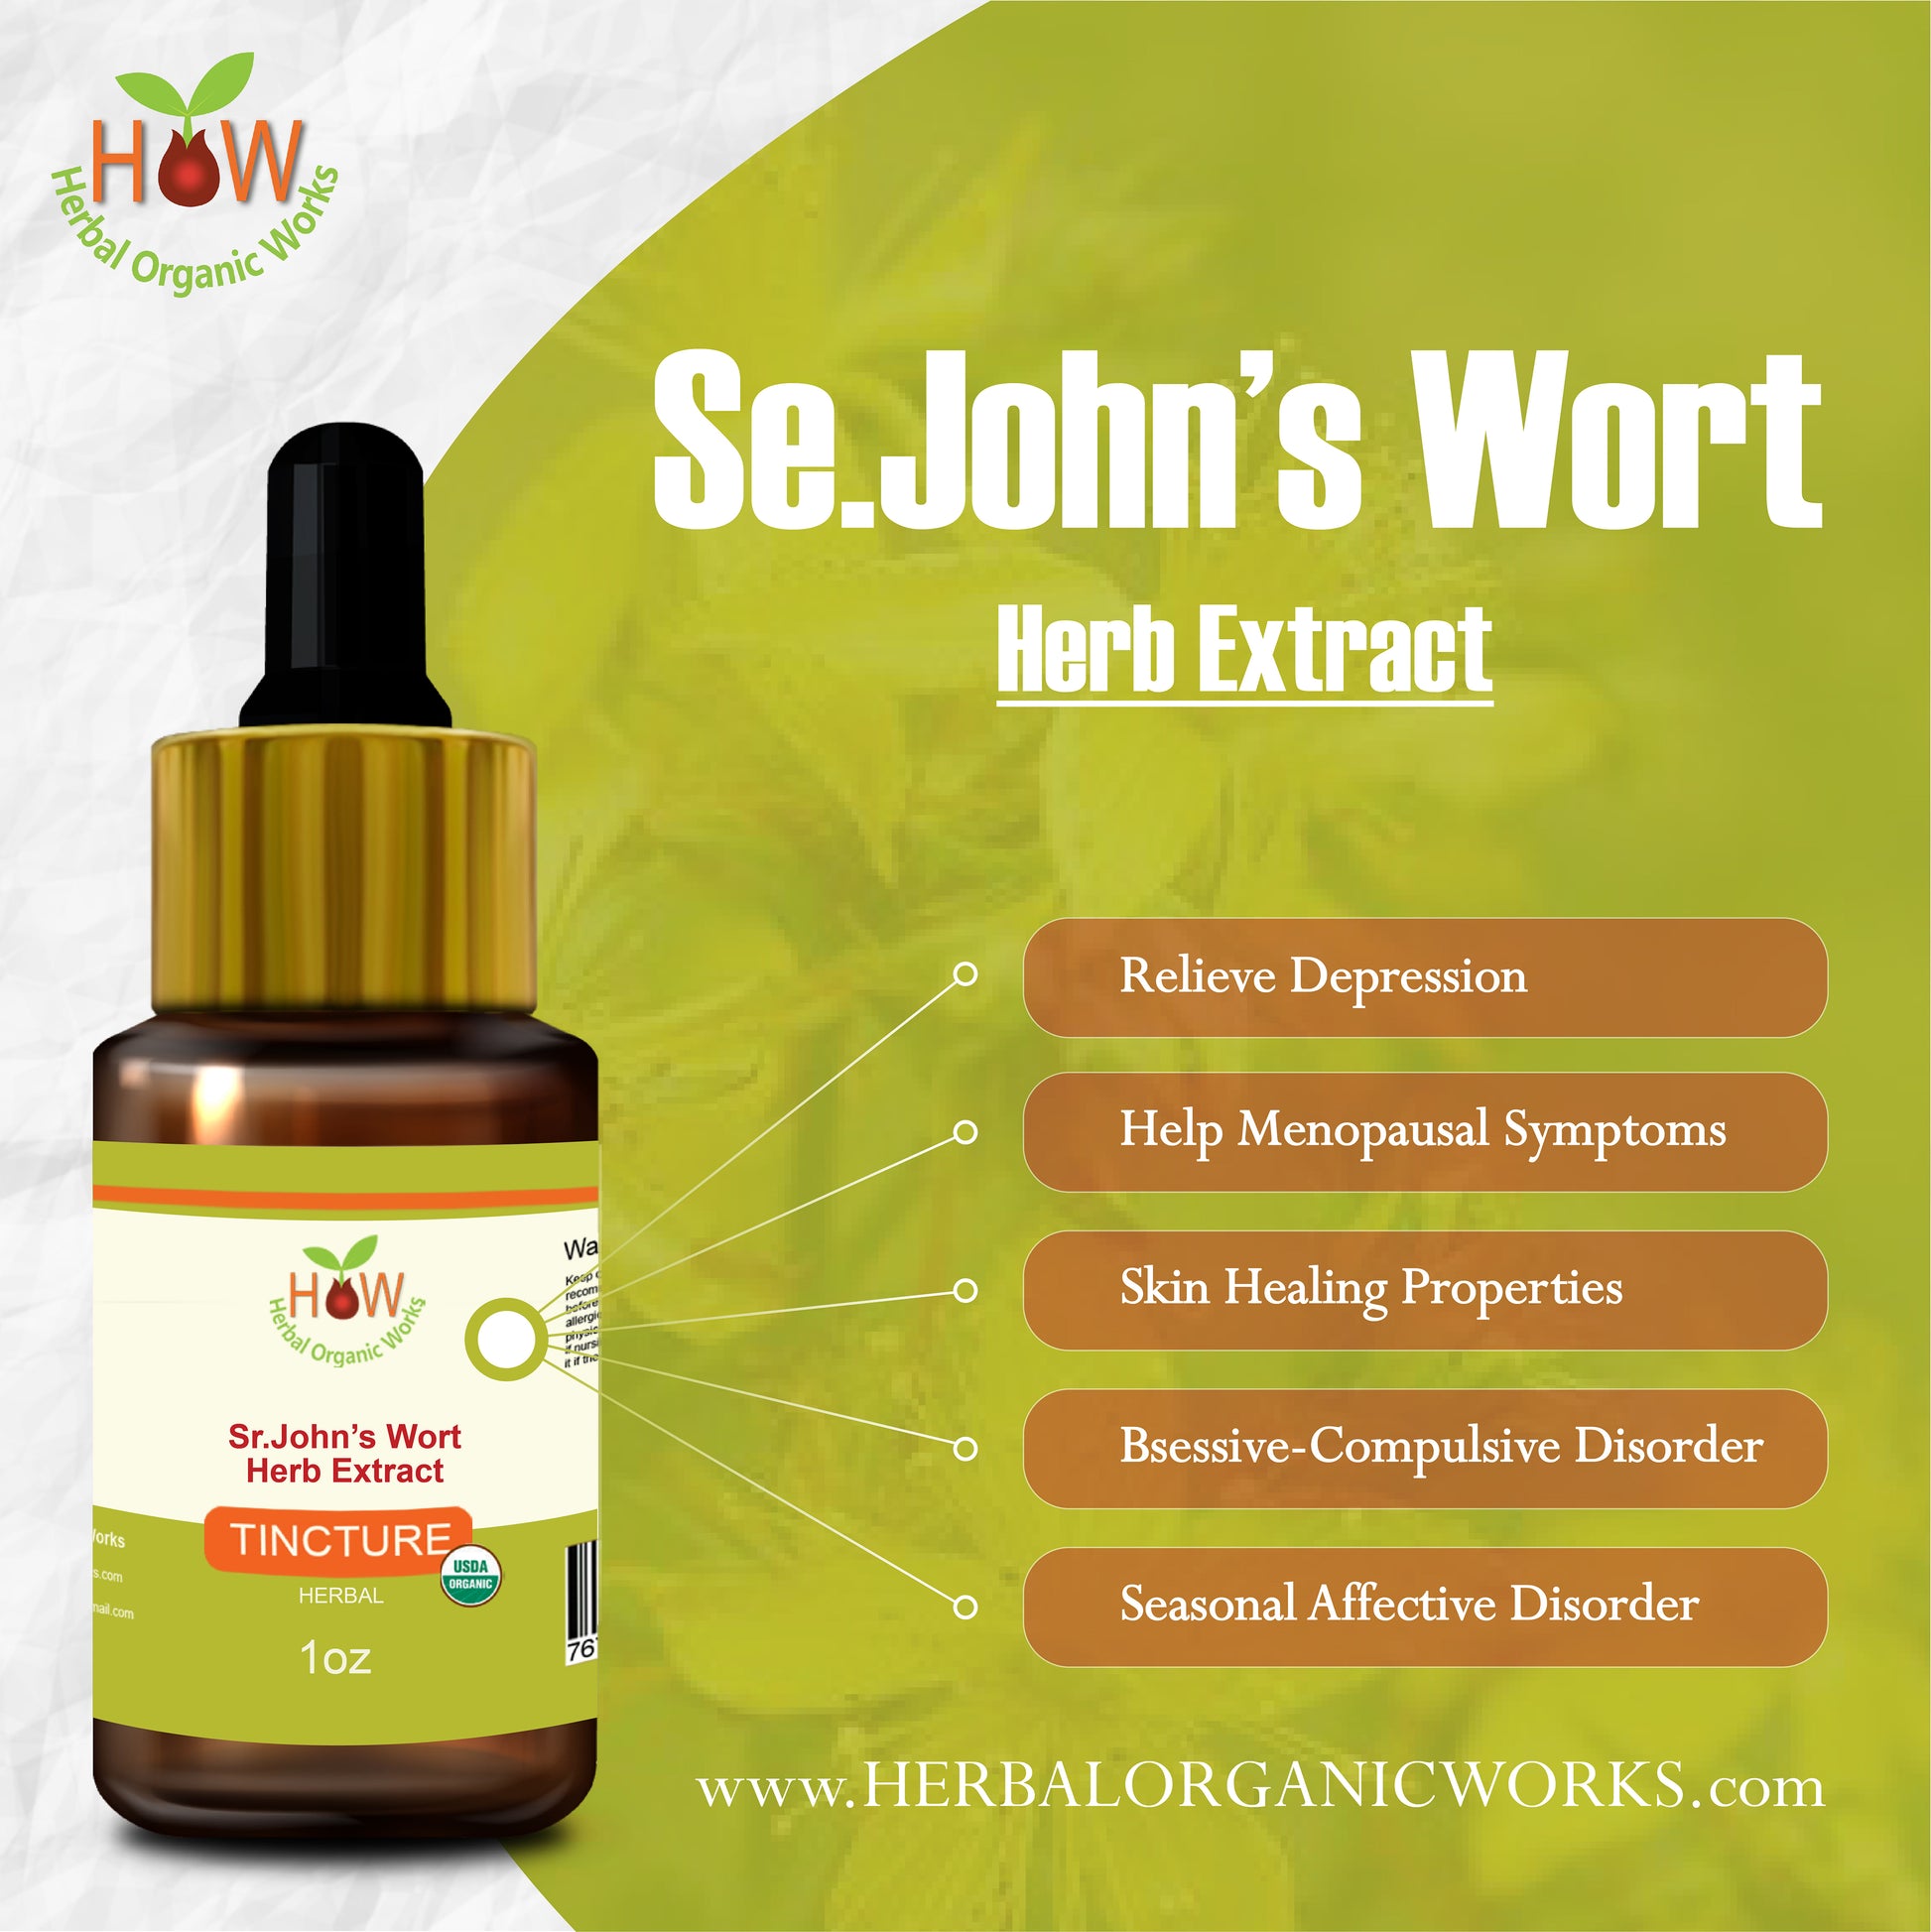 Sr.John’s Wort Herb Extract